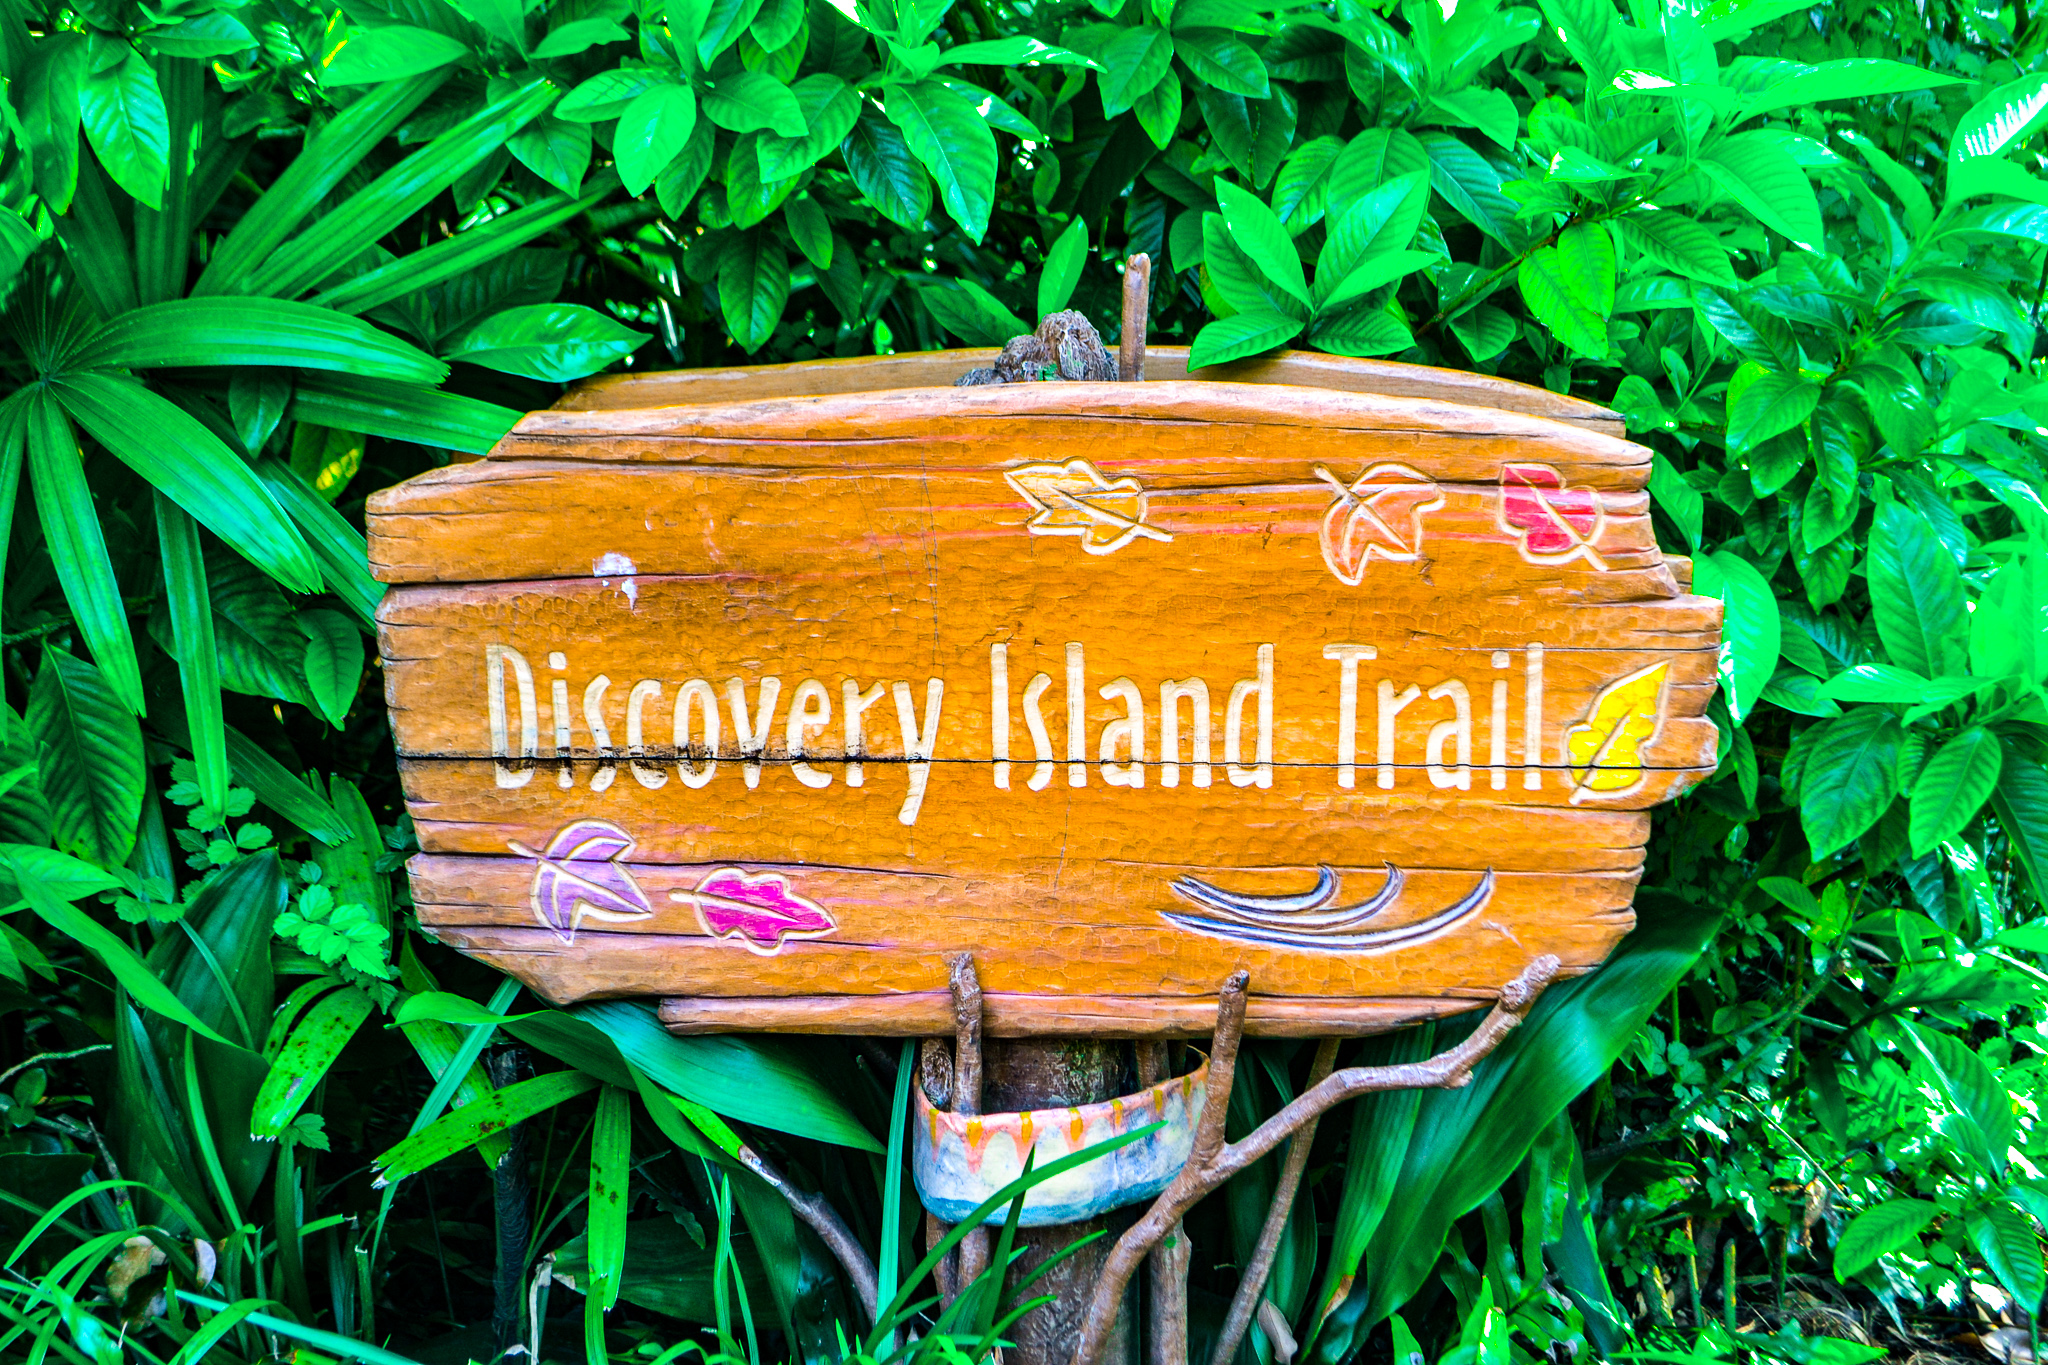 Discovery Island Trail Entrance Sign in Disney's Animal Kingdom